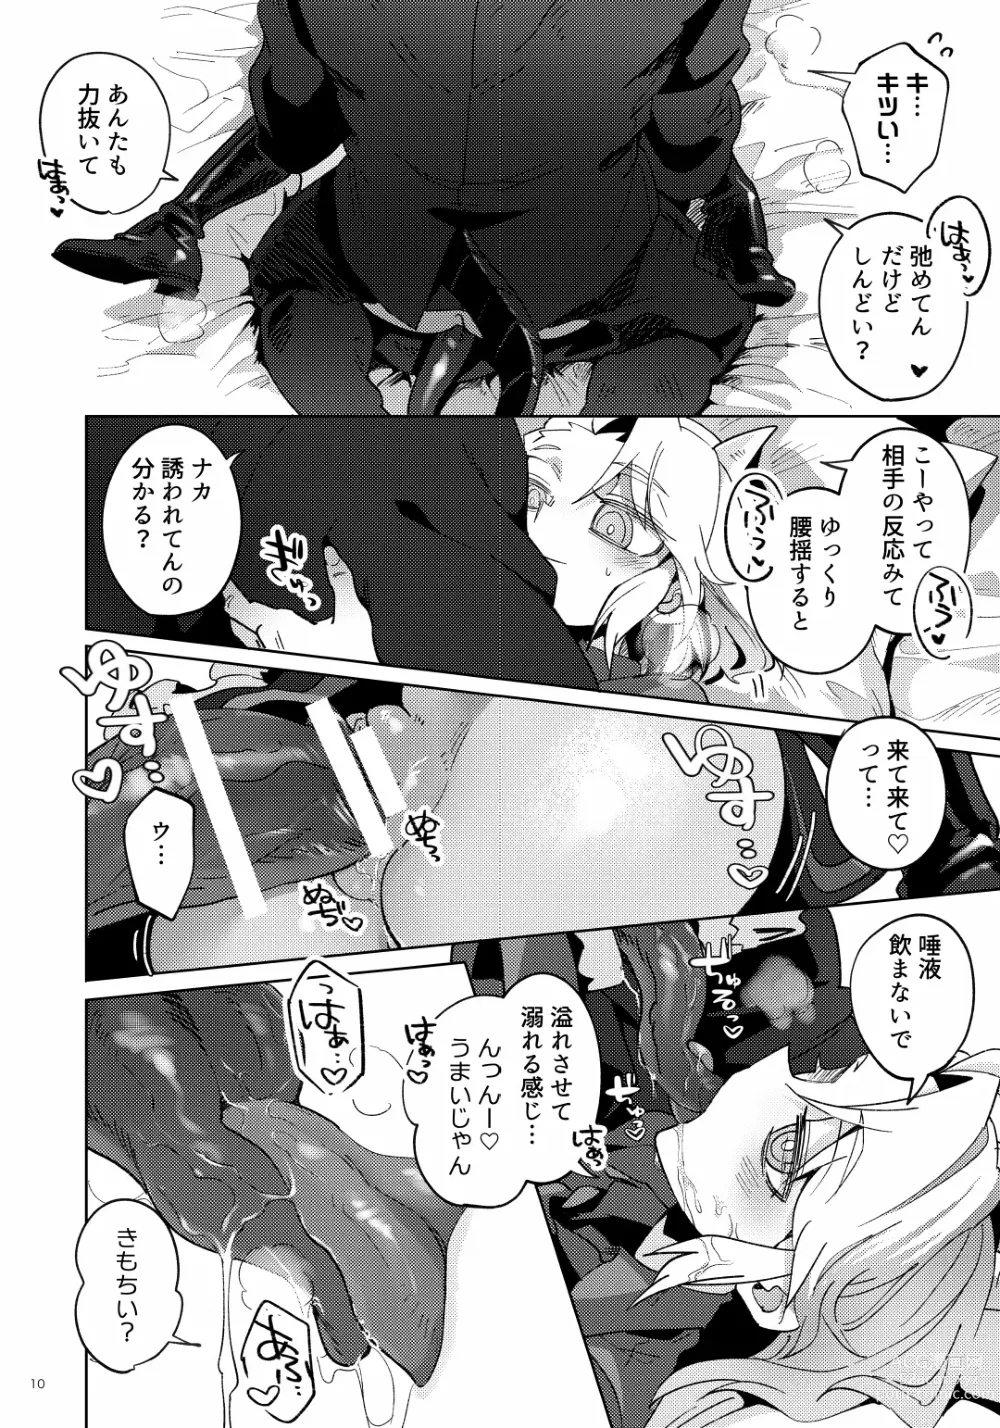 Page 9 of doujinshi Re: